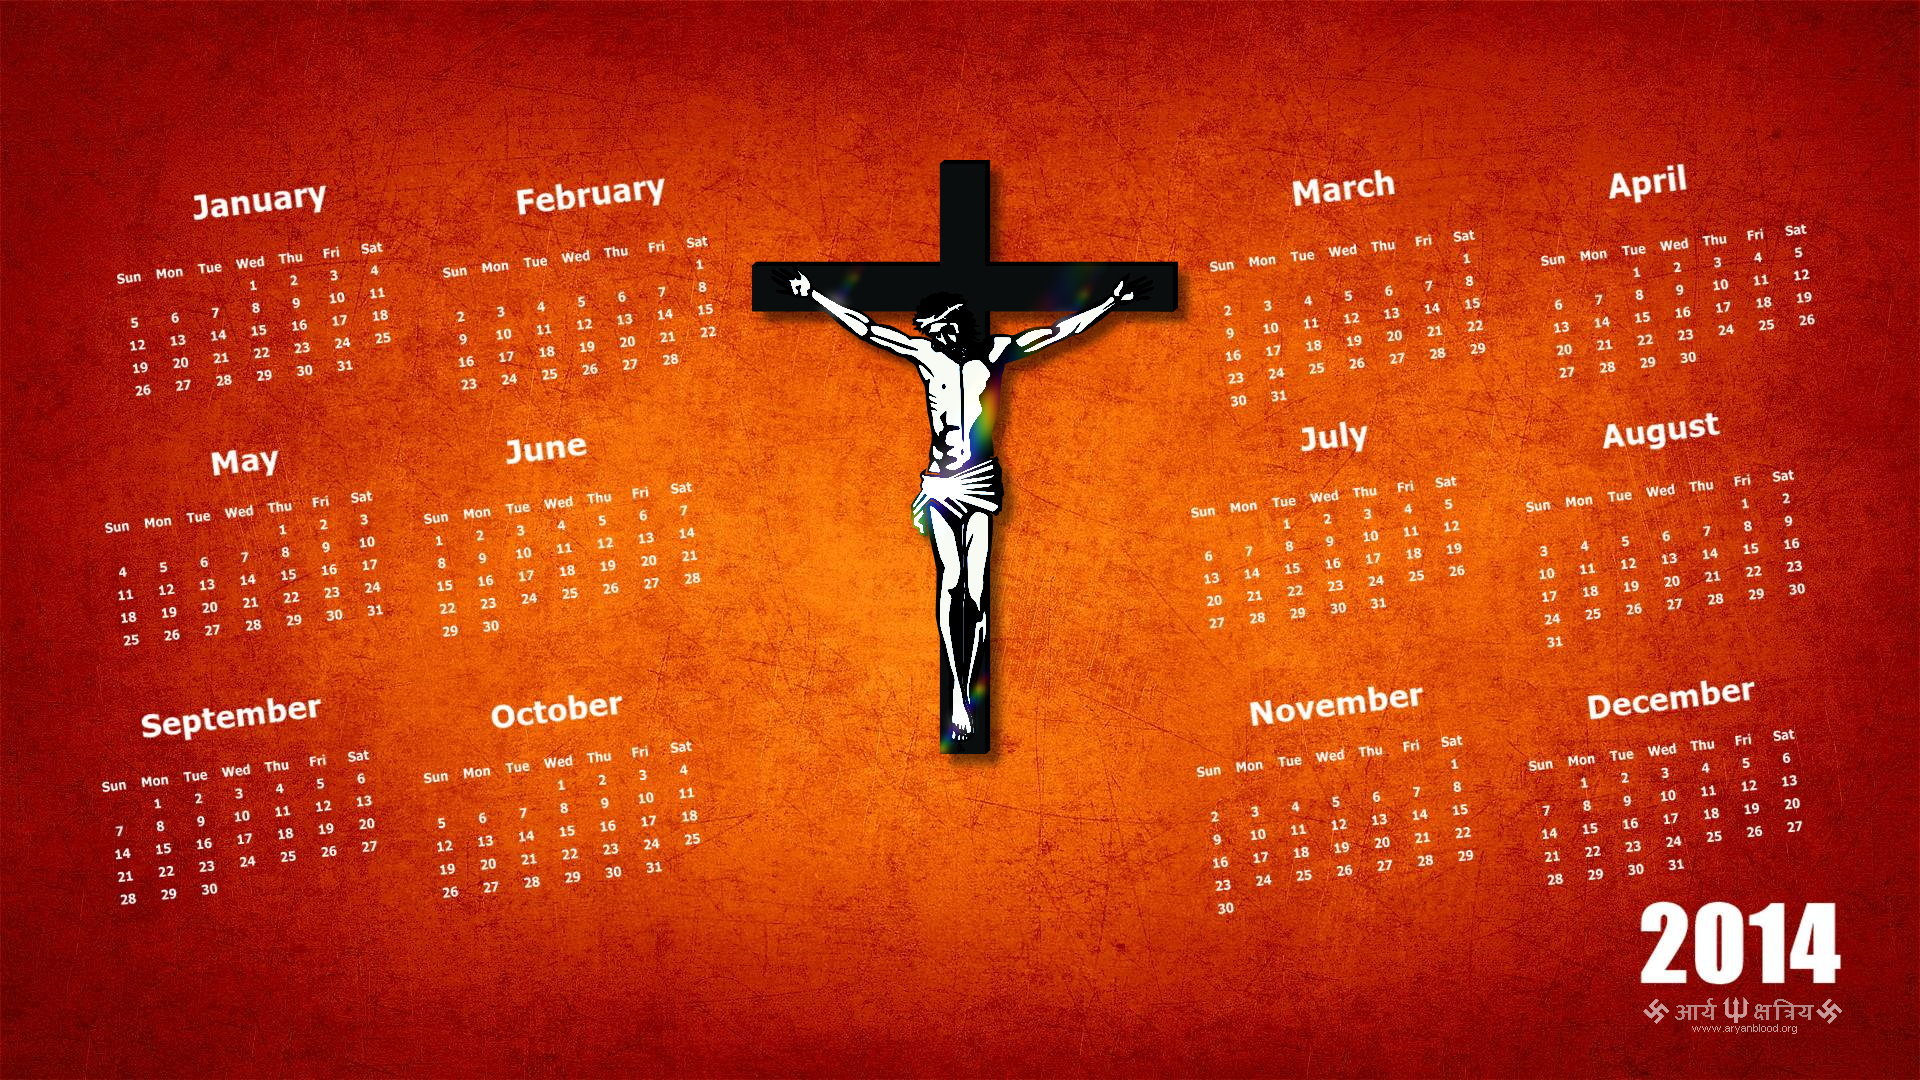 free-download-fav-0-rate-2-tweet-1920x1080-religion-calendar-jesus-christianity-1920x1080-for